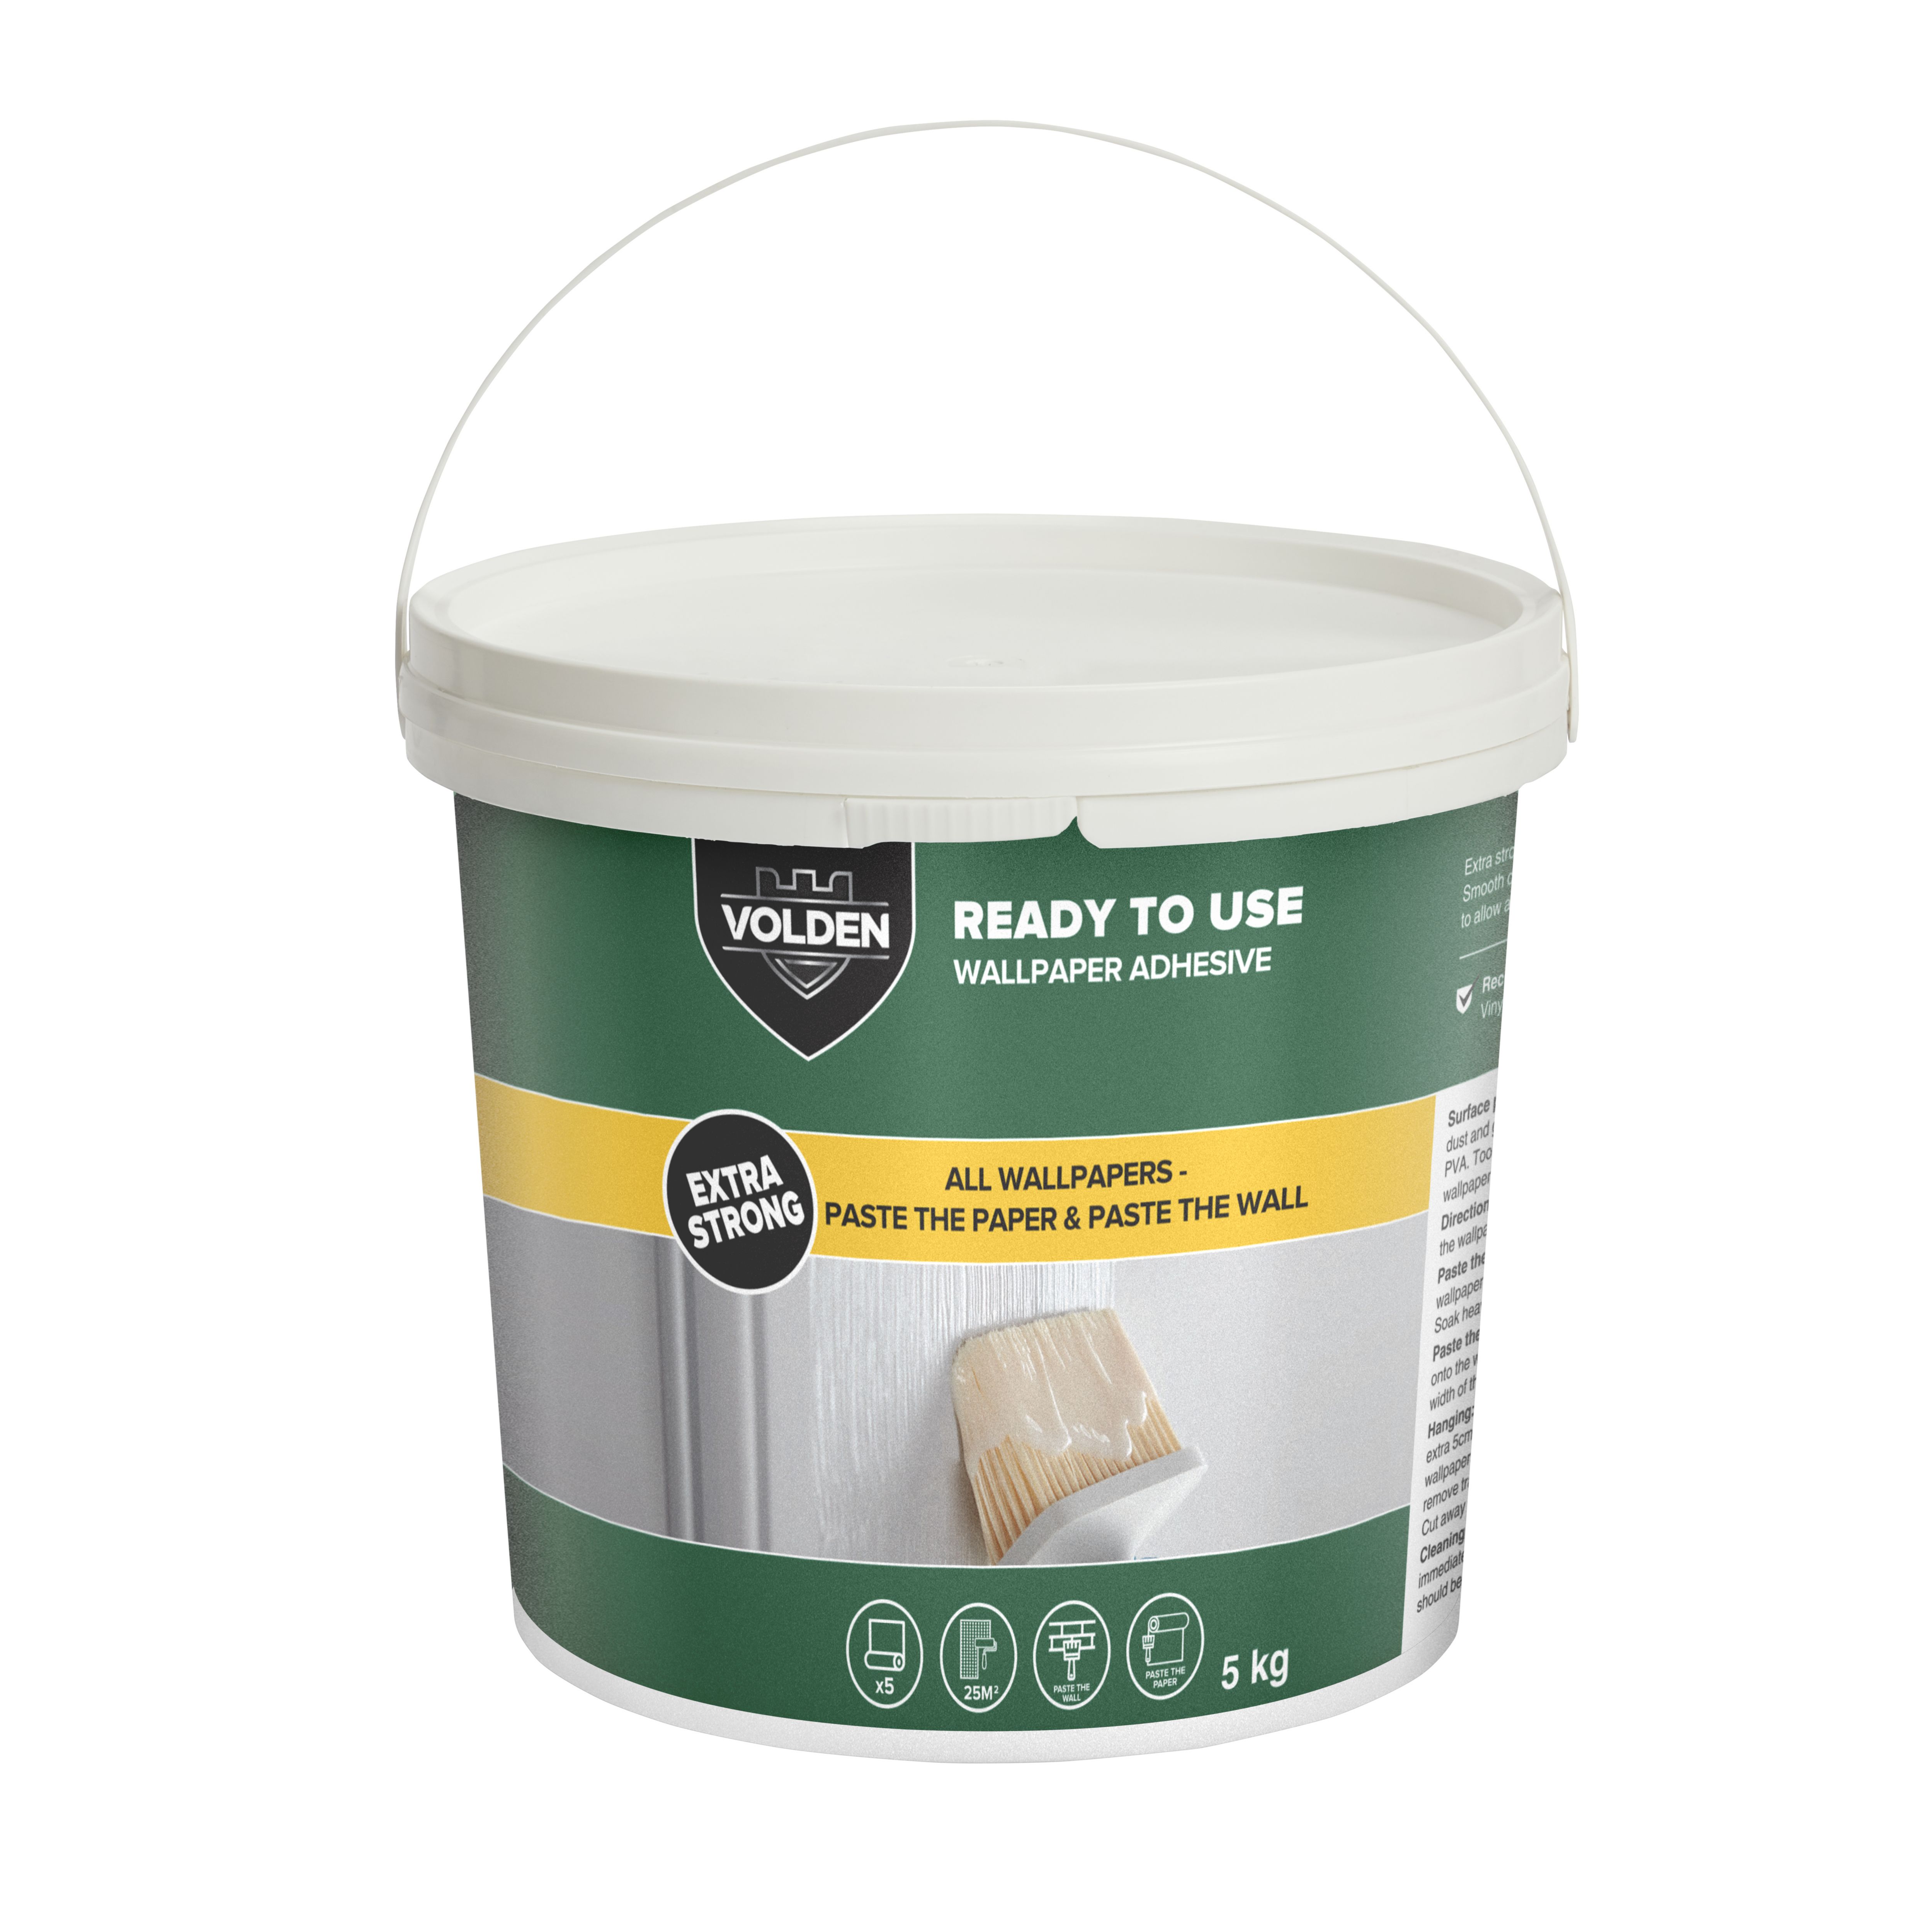 Solvite All Purpose Wallpaper Adhesive Powder 30 Rolls